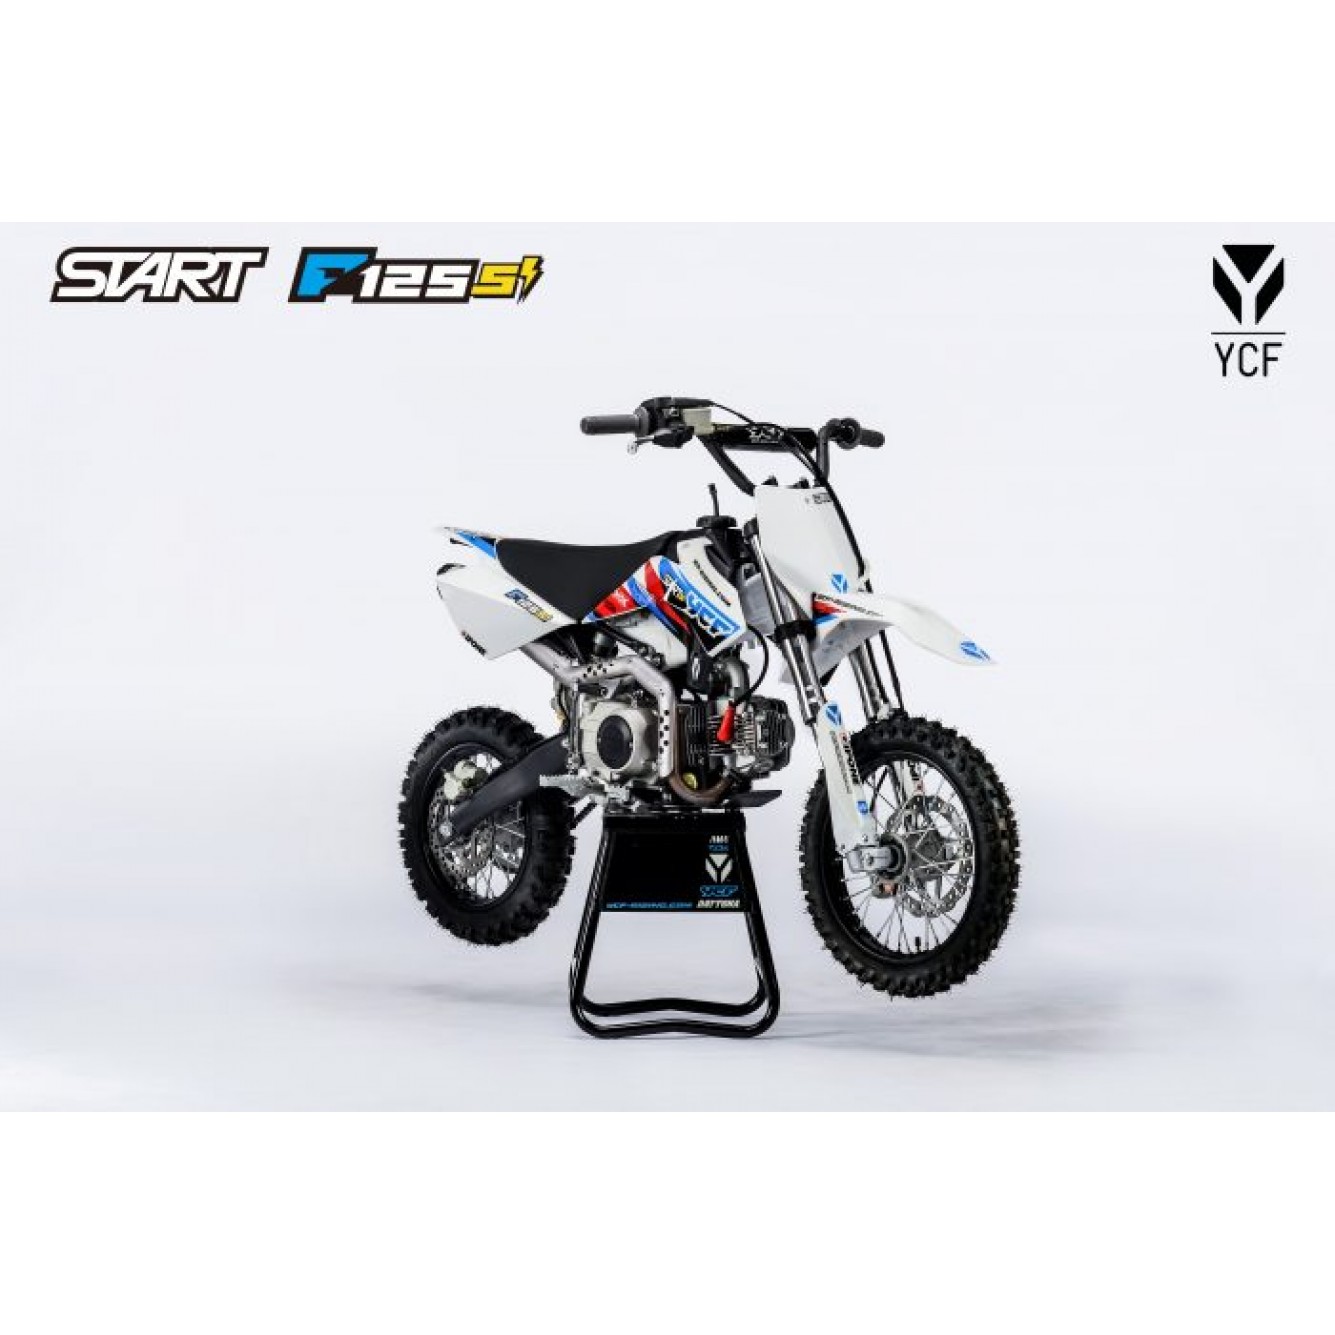 YCF | Pitbike Start F 125 SE